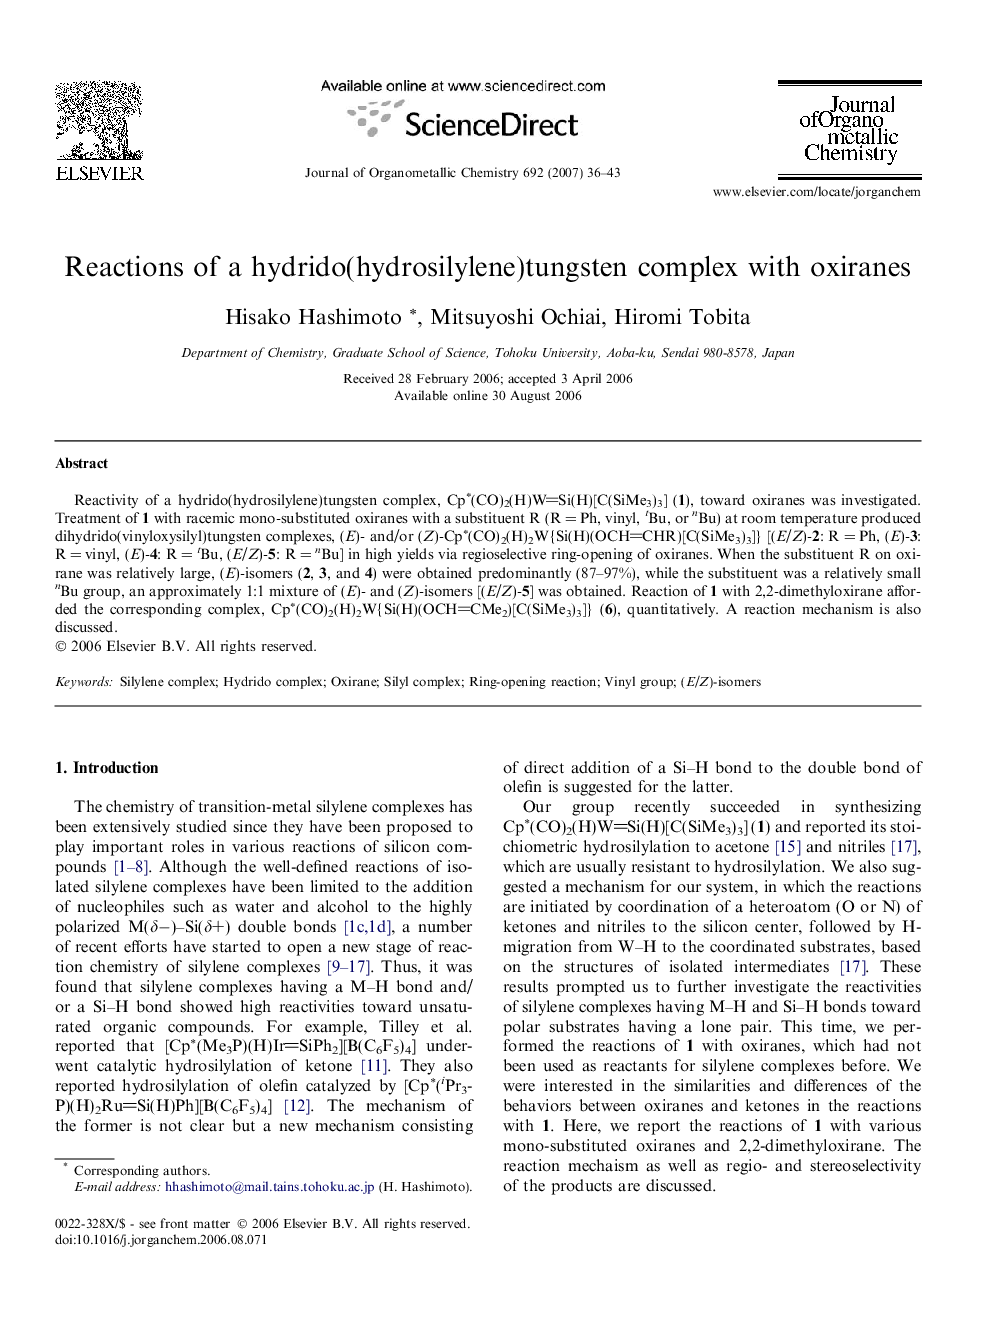 Reactions of a hydrido(hydrosilylene)tungsten complex with oxiranes